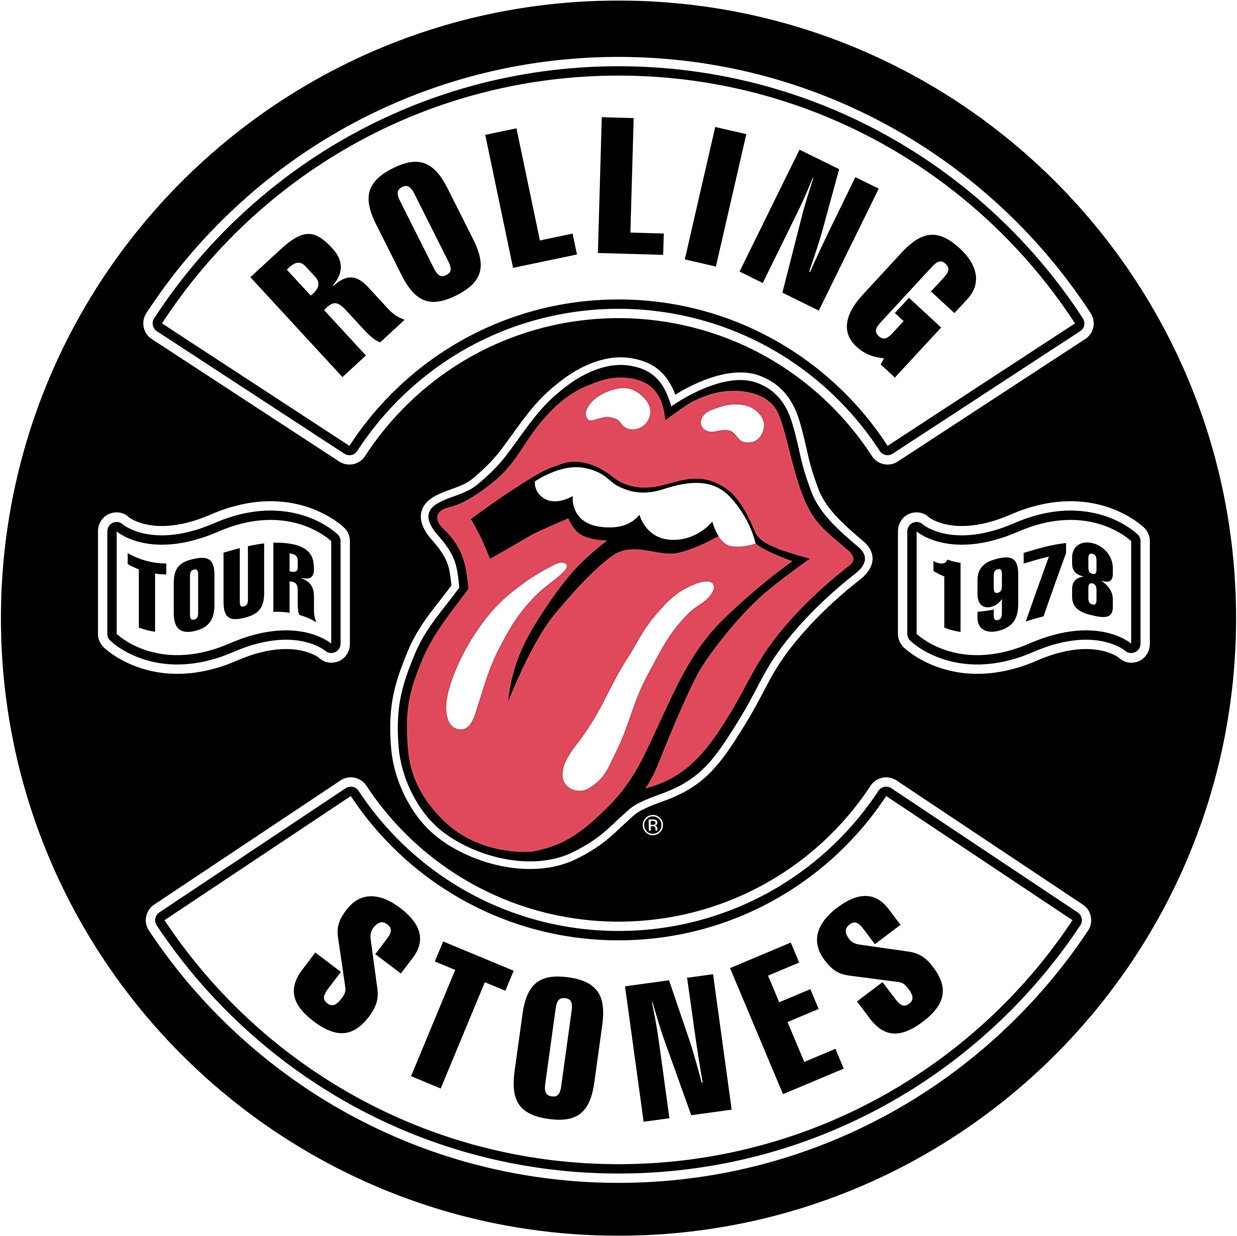 Patch-uri The Rolling Stones Tour 1978 Patch-uri